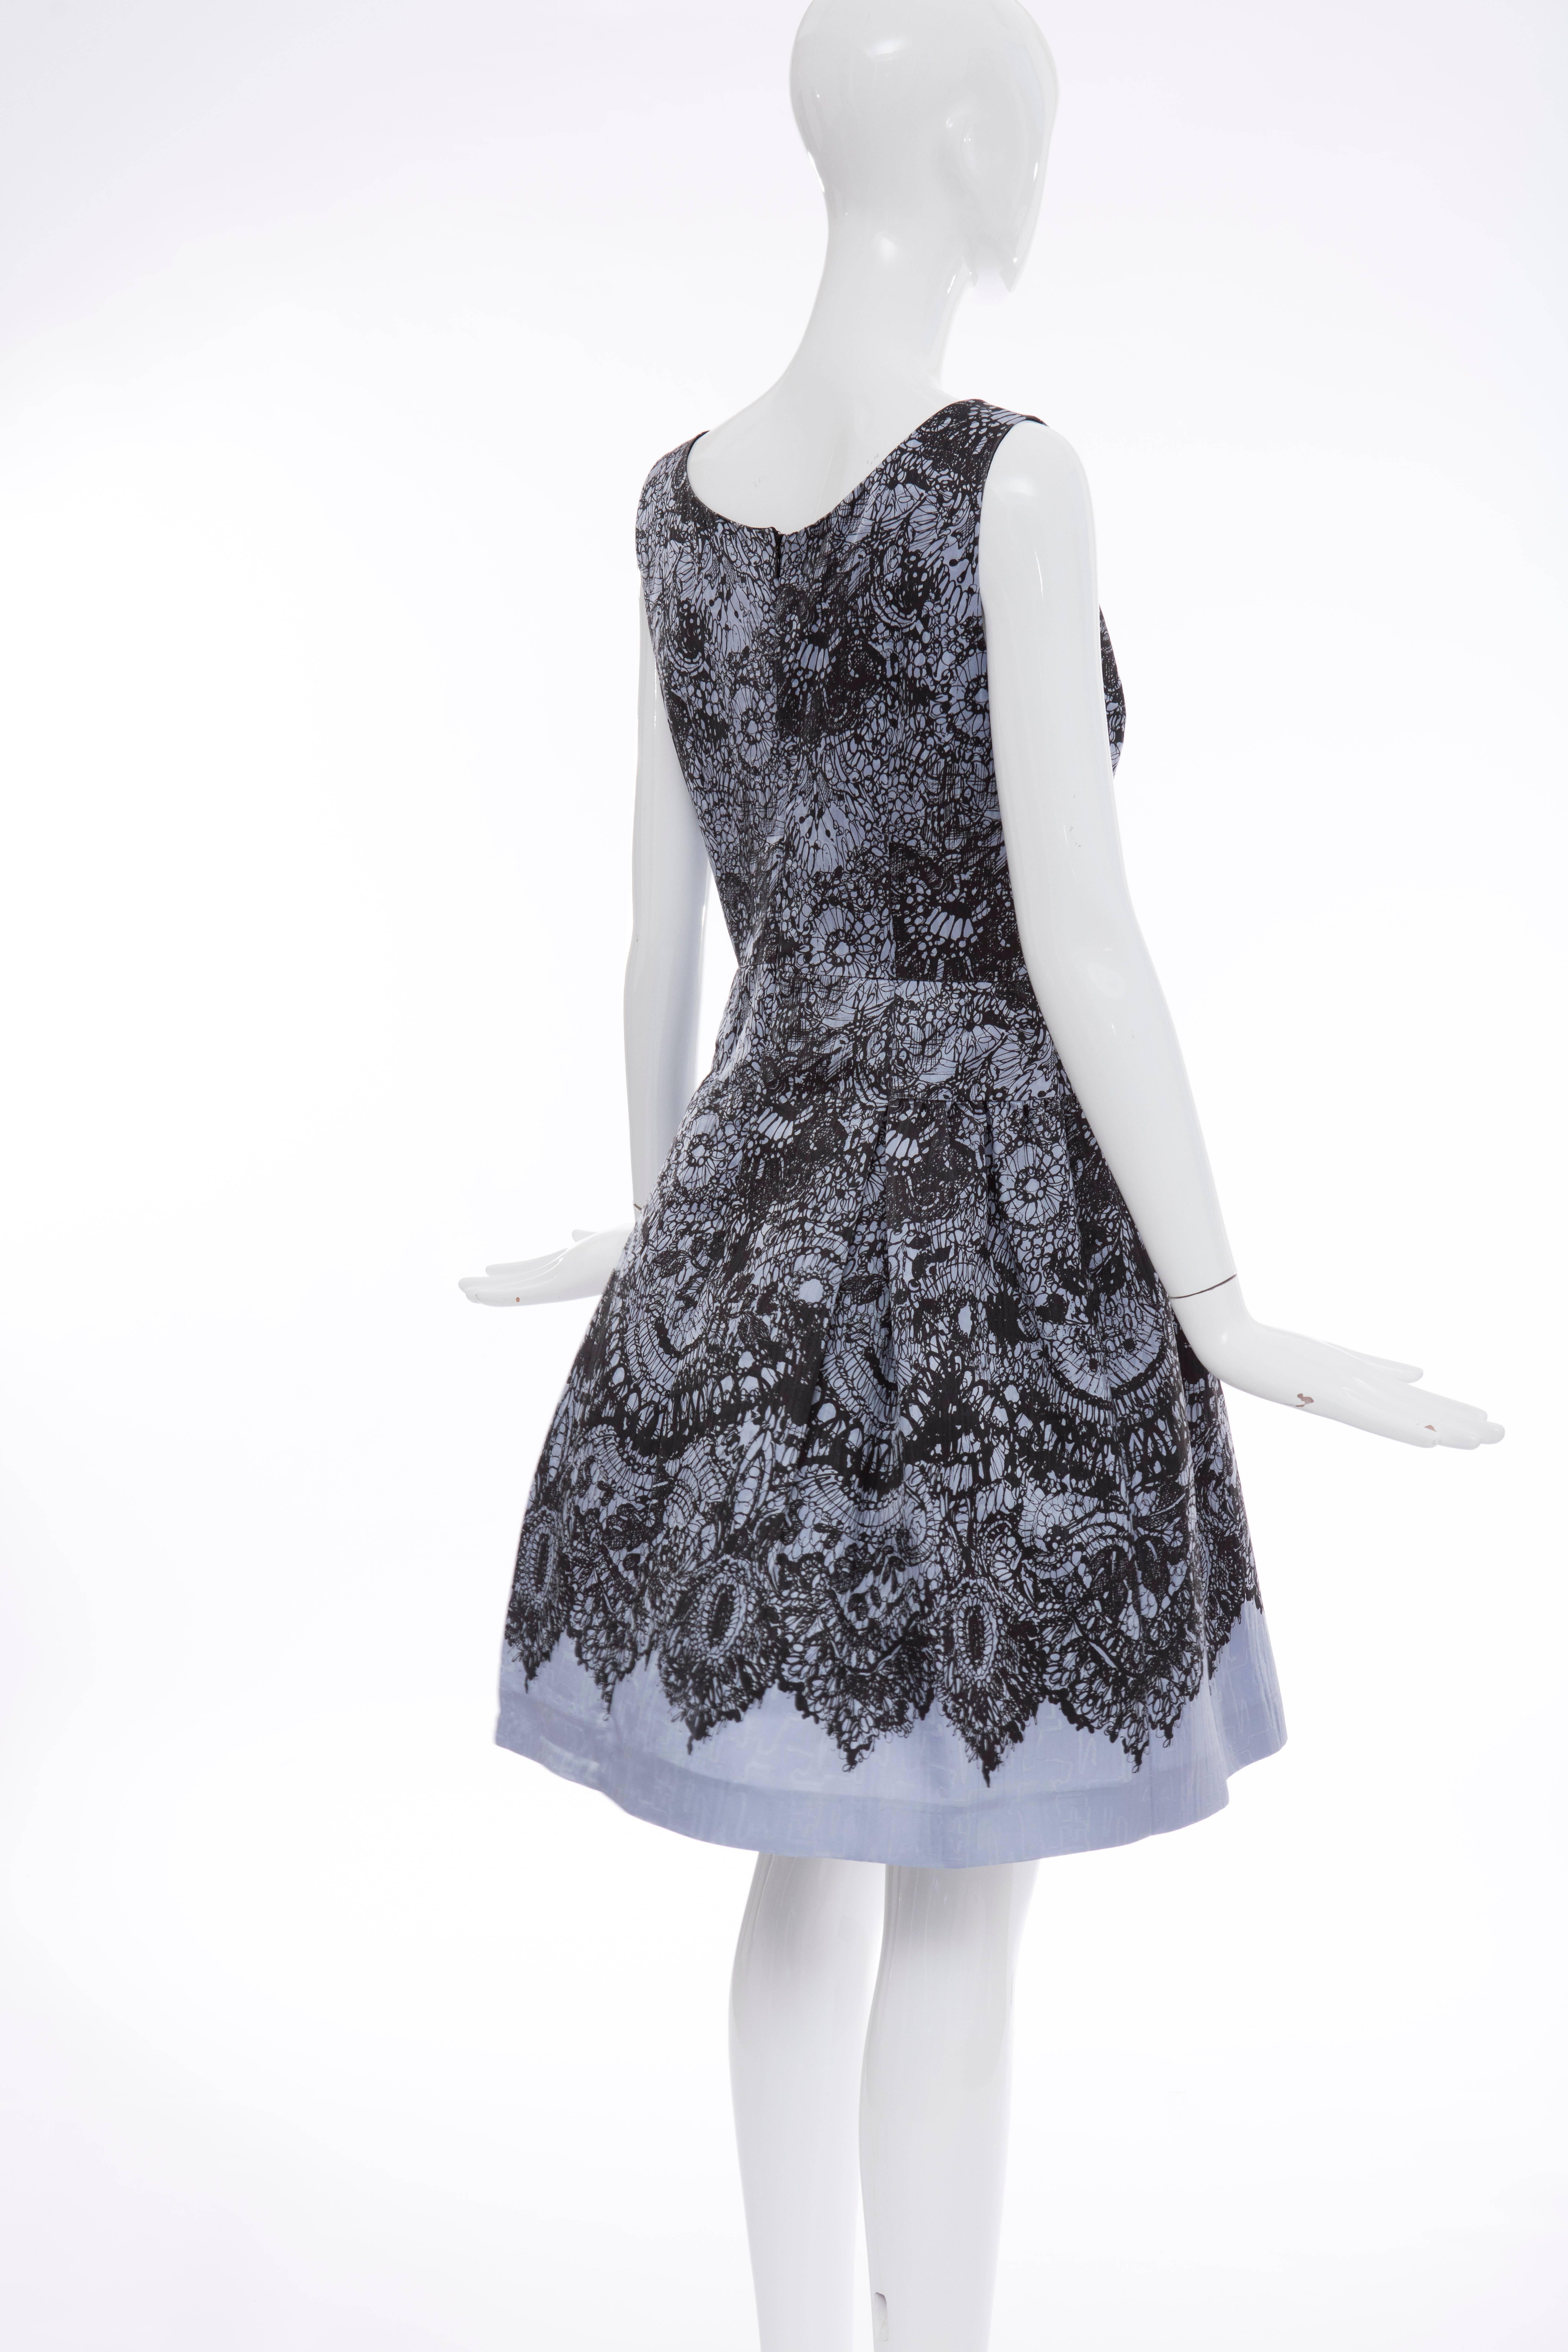 Prada Printed Viscose Silk Nylon Sleeveless Dress, Circa 2011 For Sale 2